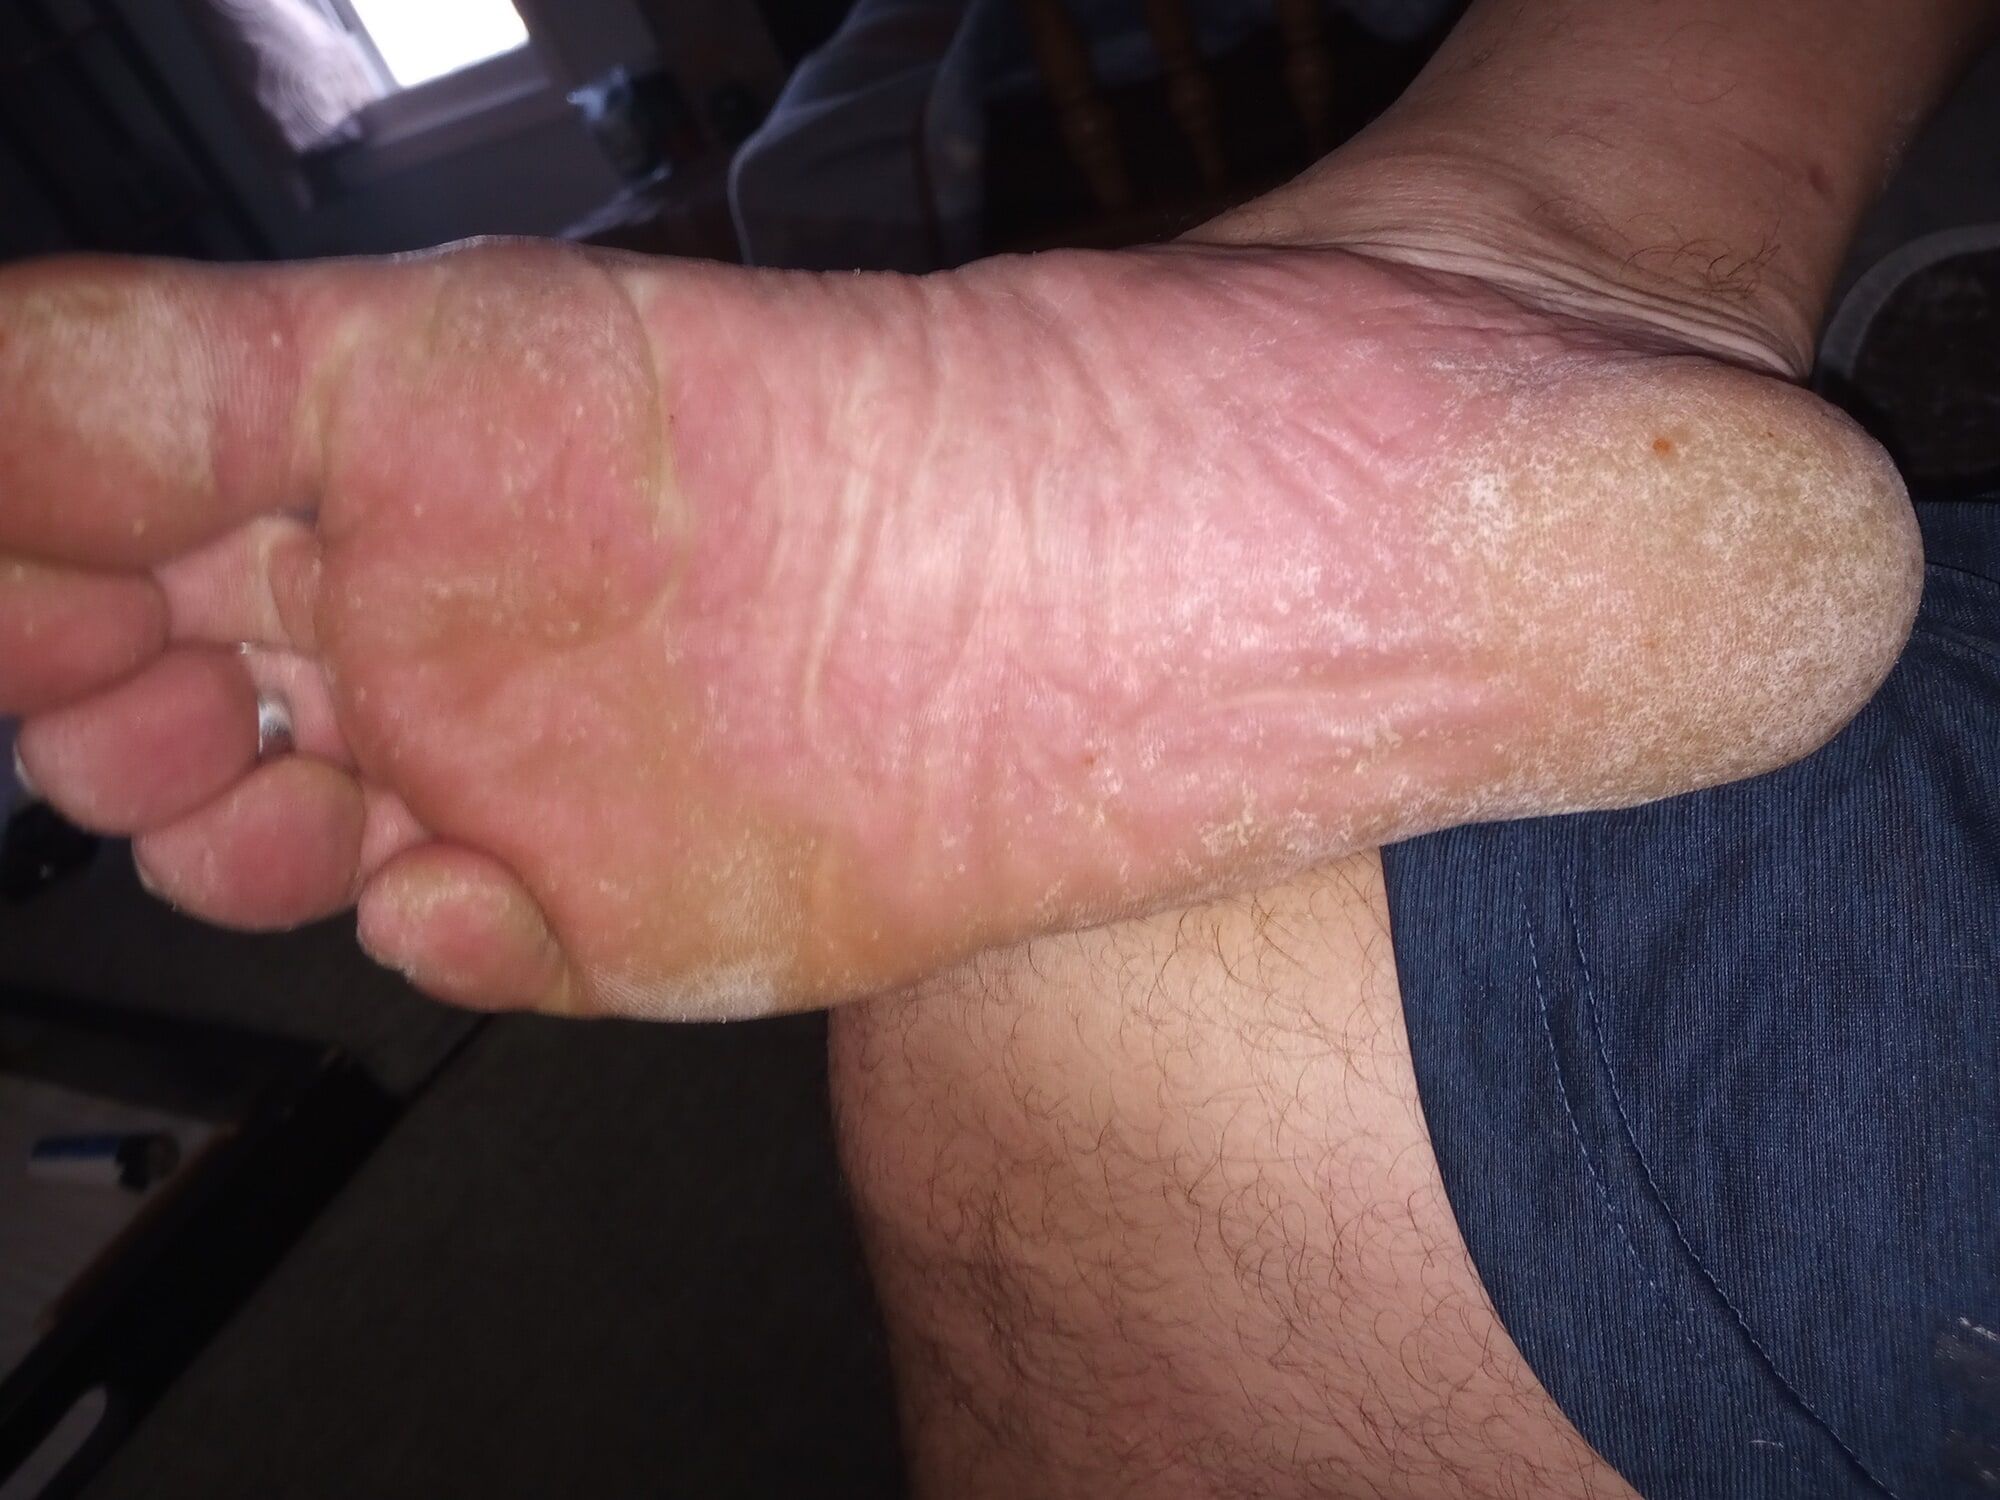 My rough Dirty Male Feet #2